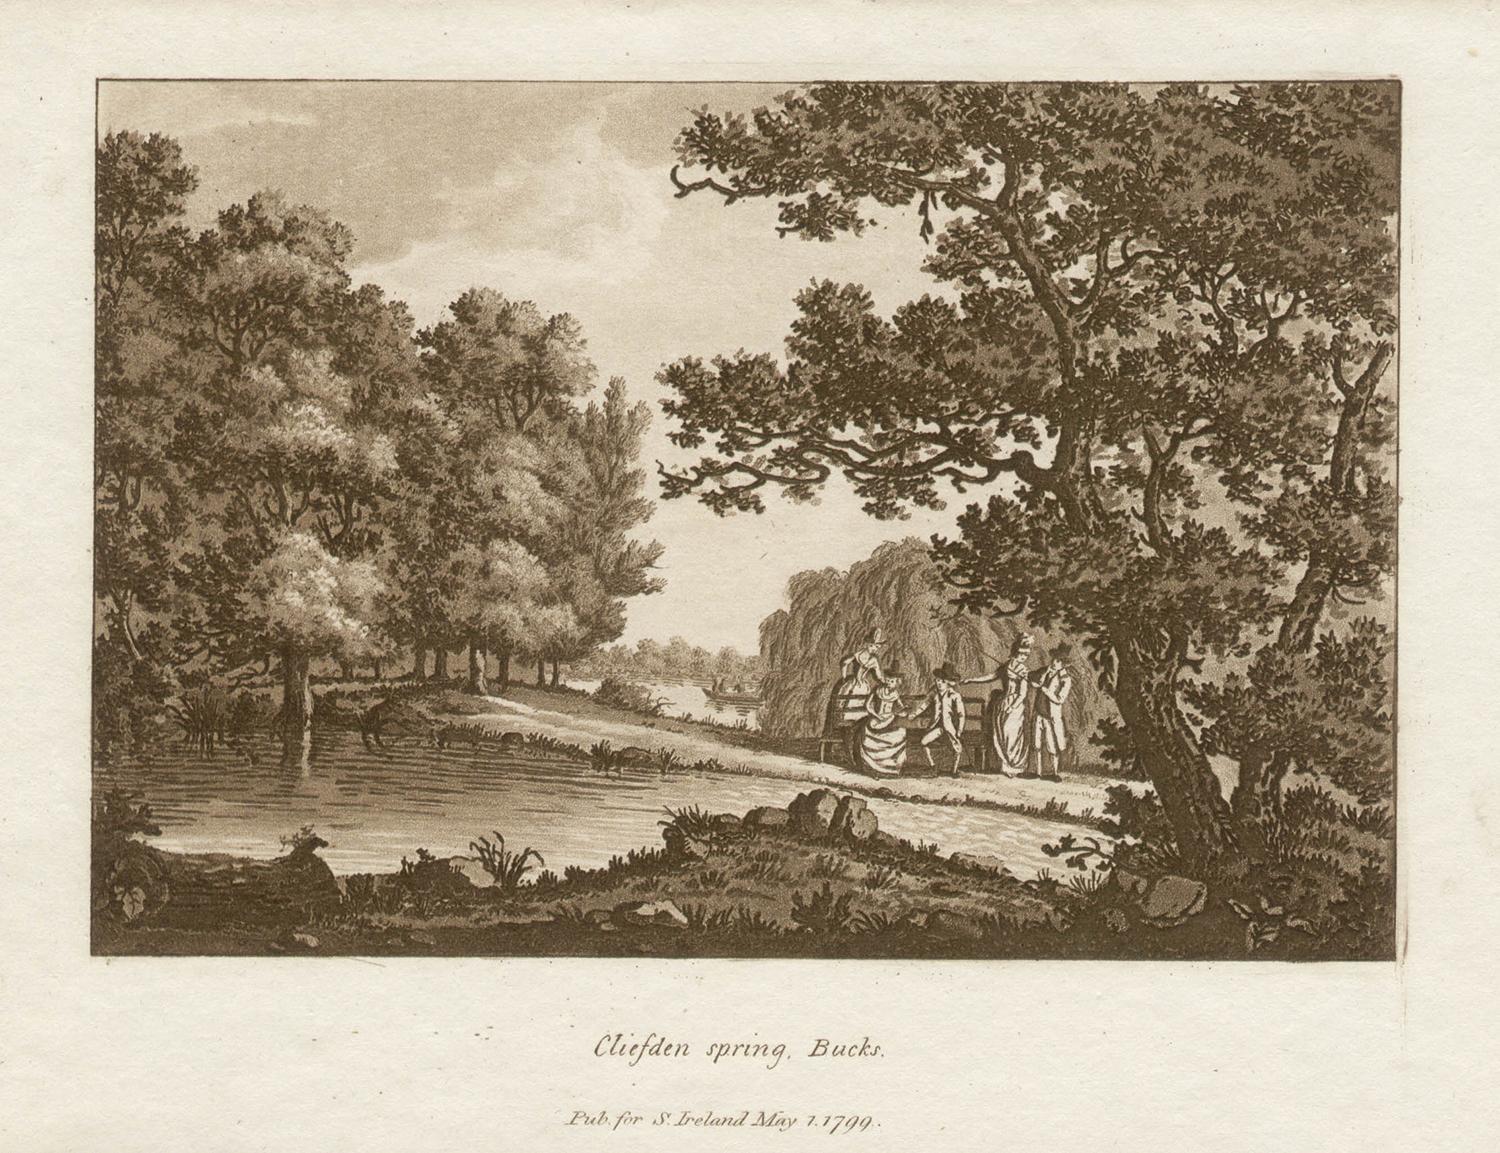 Samuel Ireland Landscape Print - Cliveden spring, Bucks, Thames, late 18th century English sepia aquatint, 1799